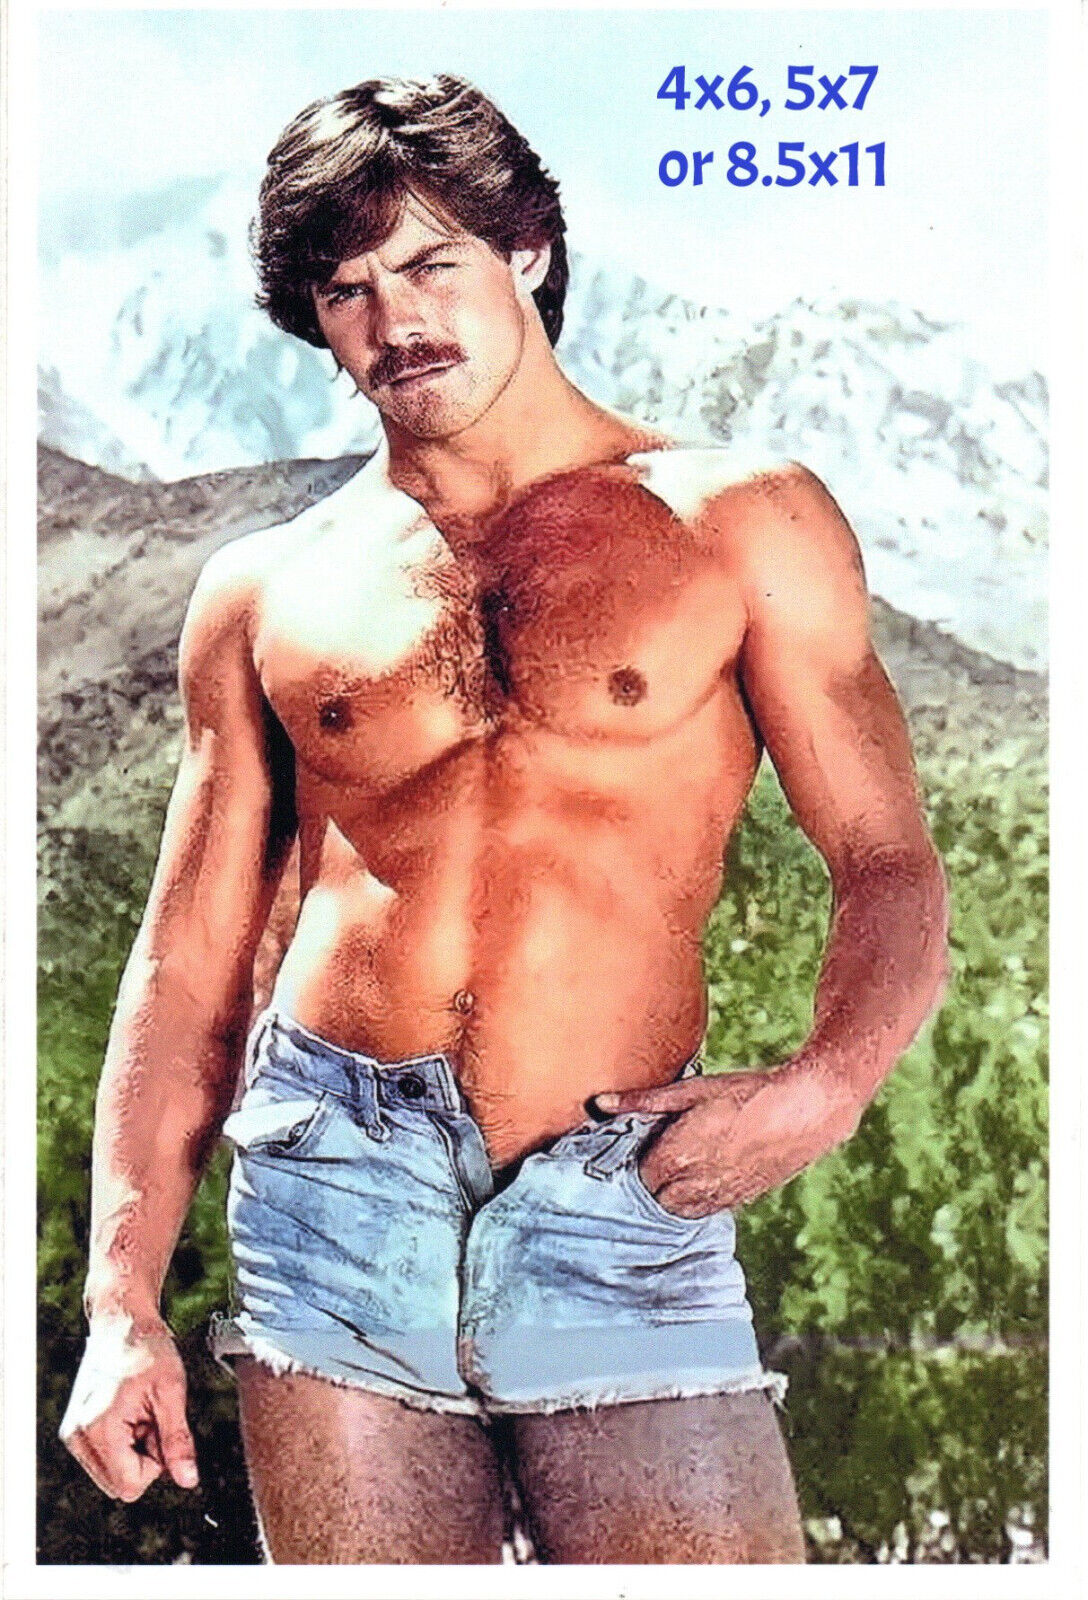 Handsome Muscular Male Bodybuilder Gay Interest Photo Photograph Reprint #28